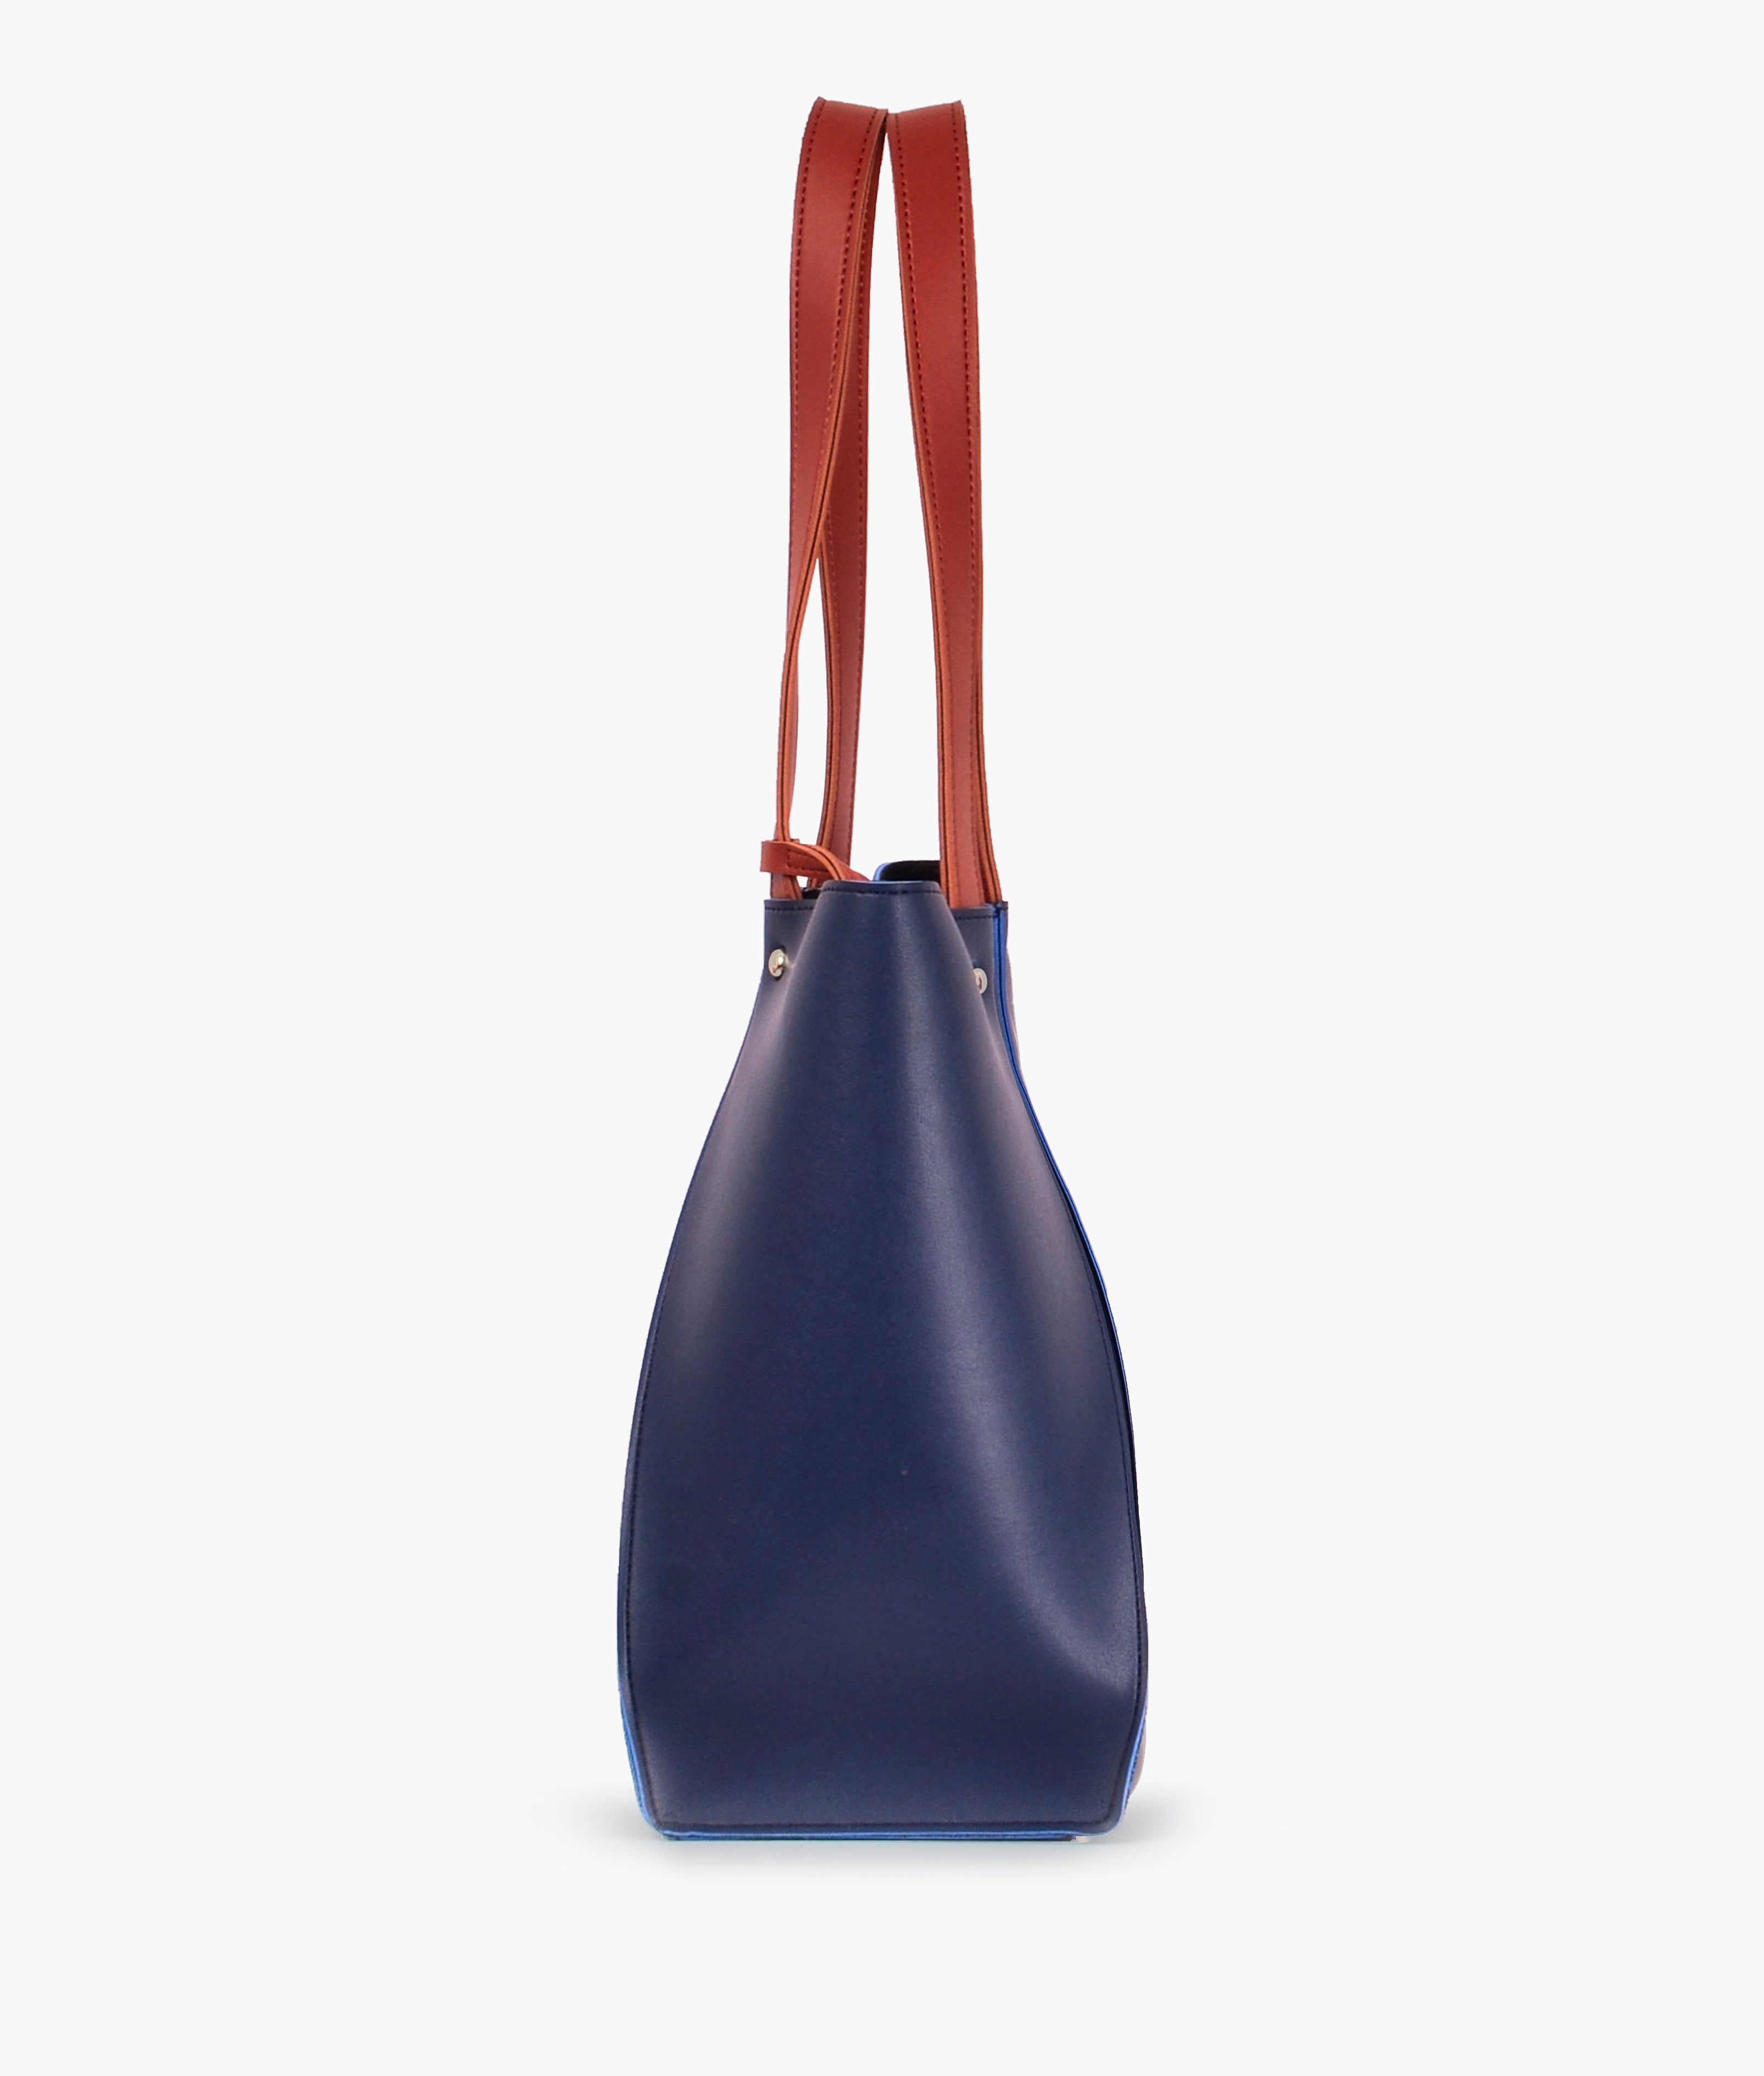 Blue shopping tote bag